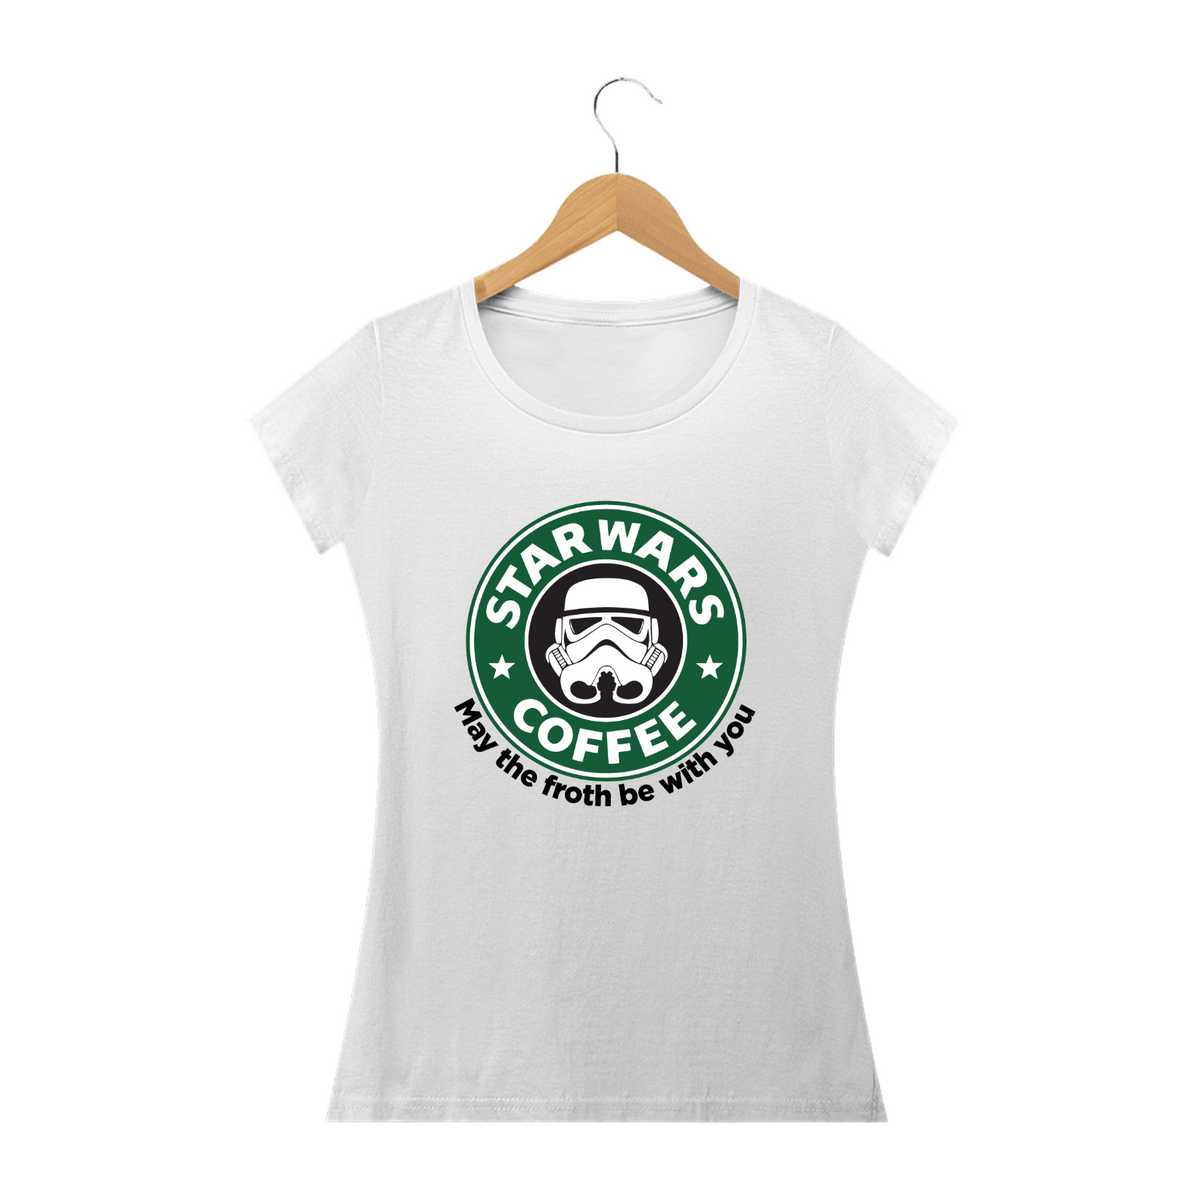 Nome do produto: Star Wars Coffee (cores claras)